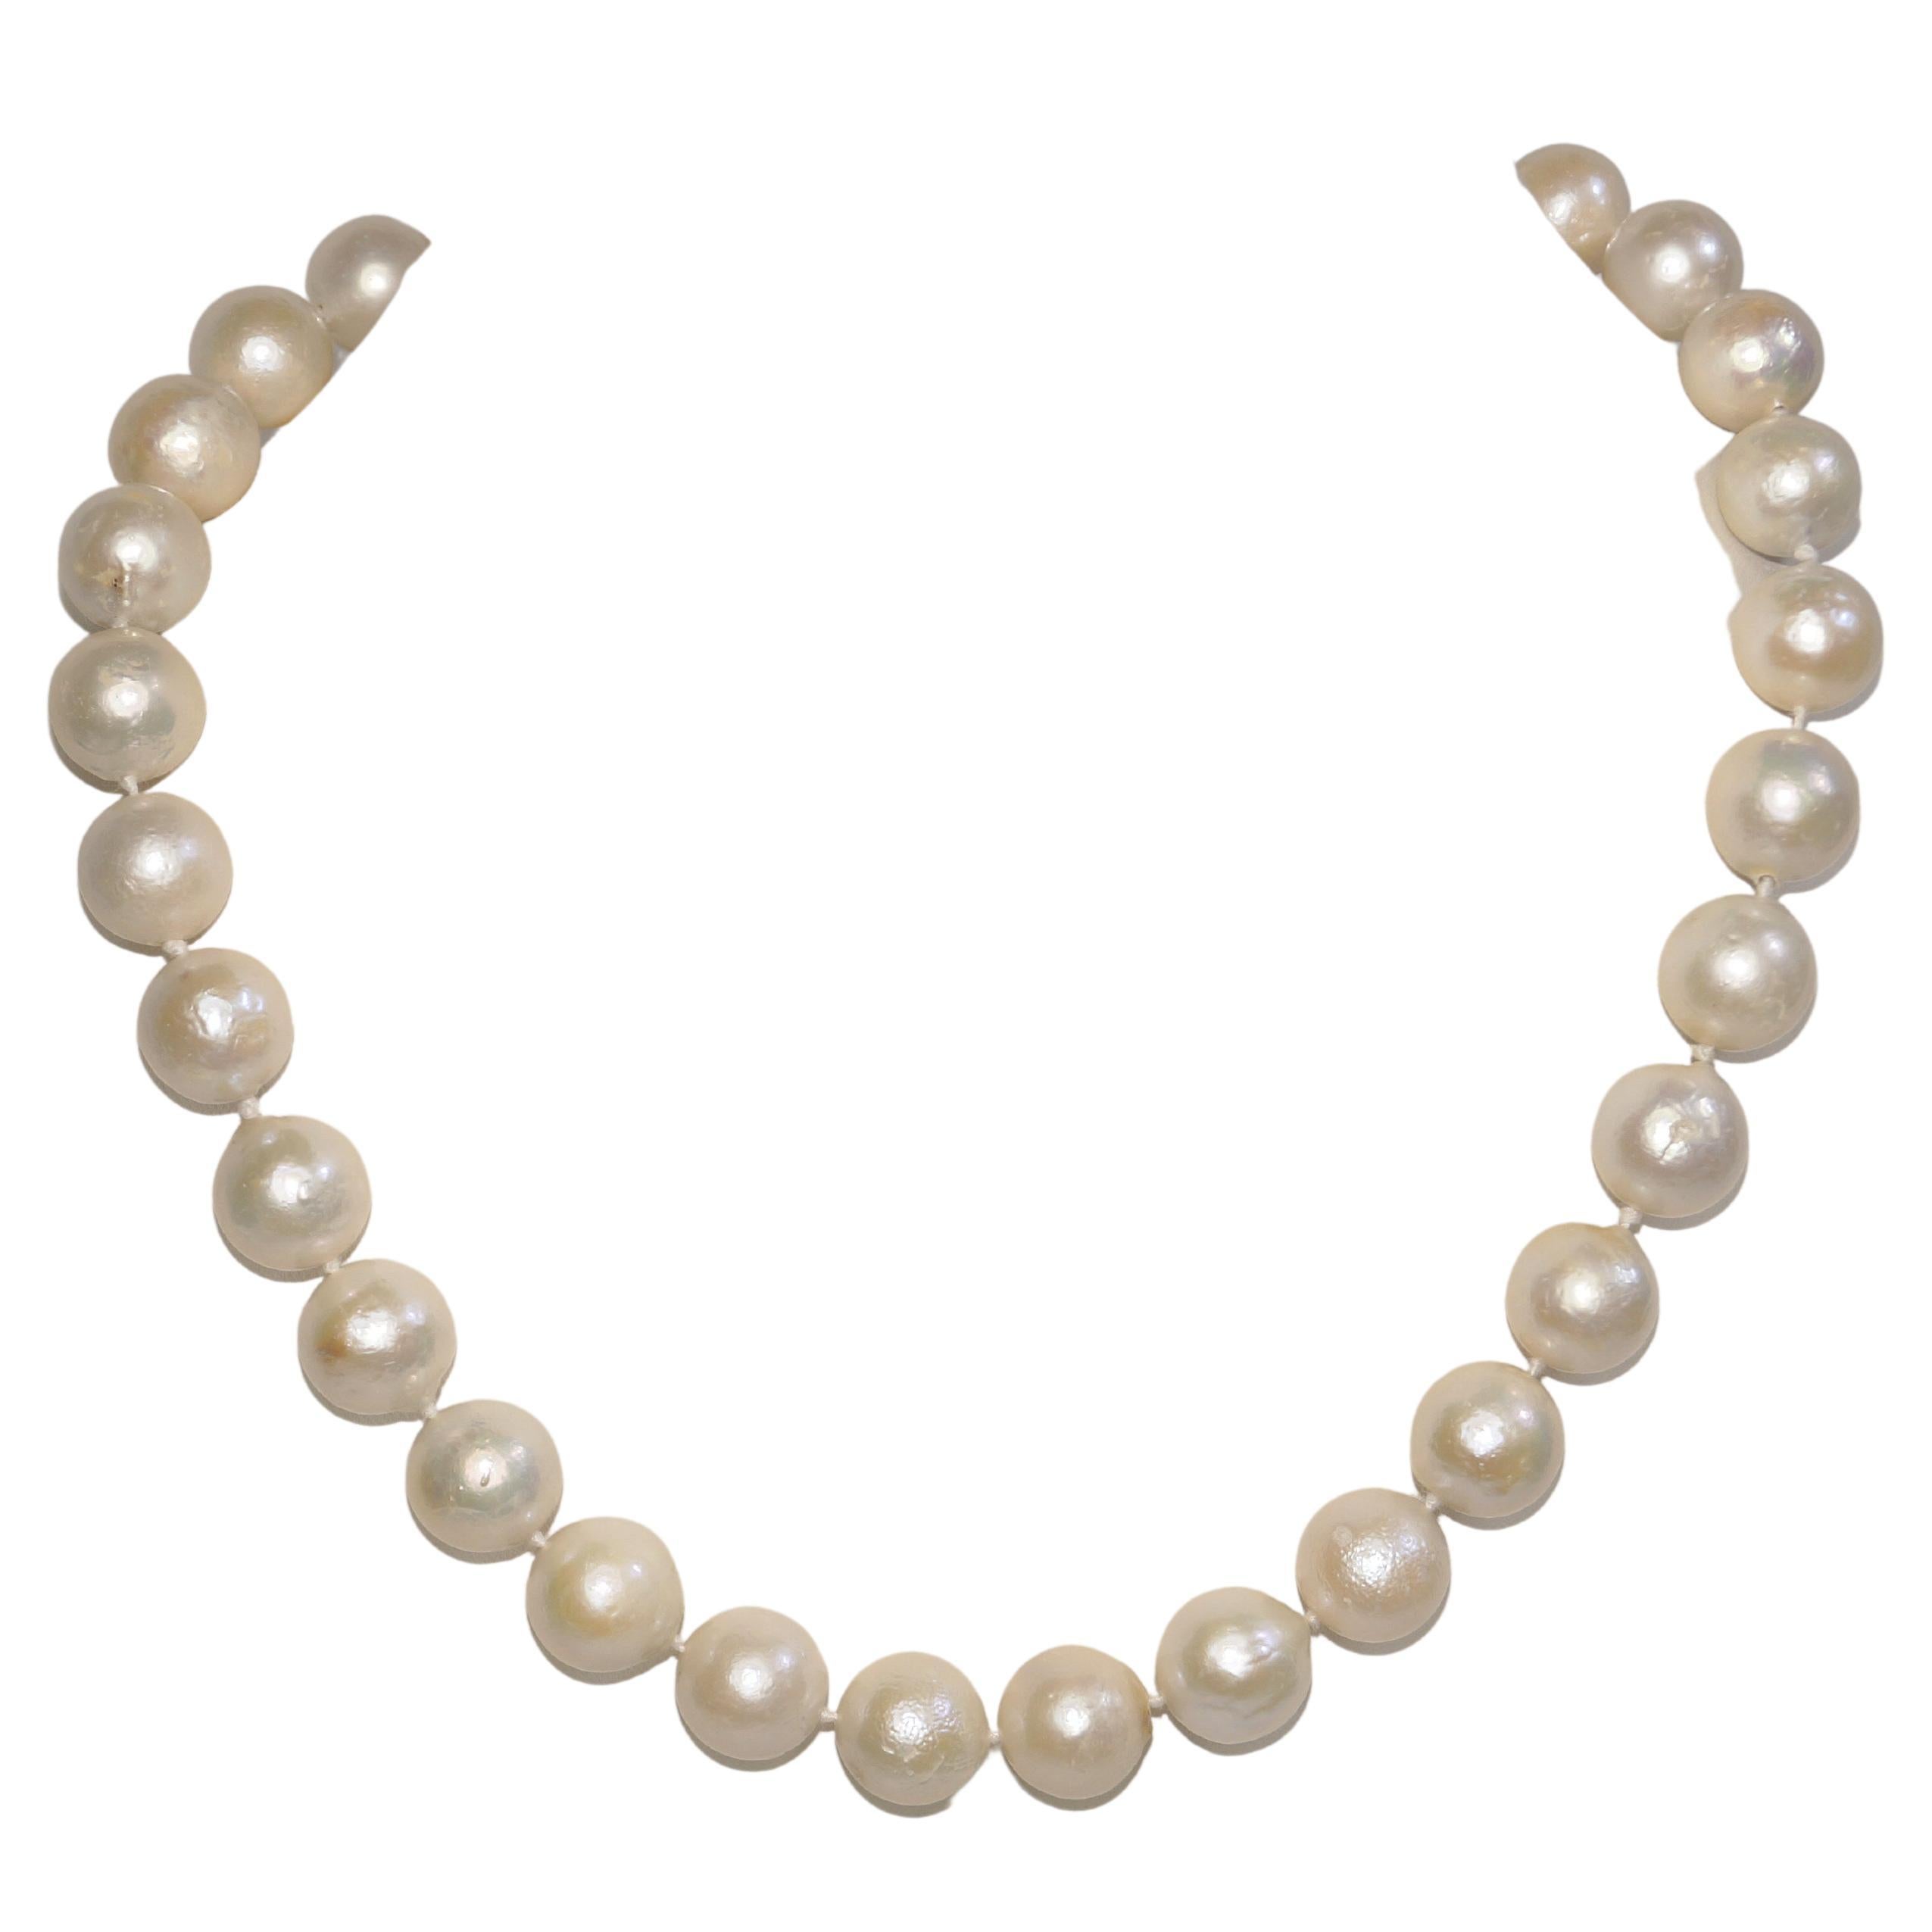 Collier de perles des mers du sud en or 14k 12-15mm Collier de mariage en perles rondes de grande taille 